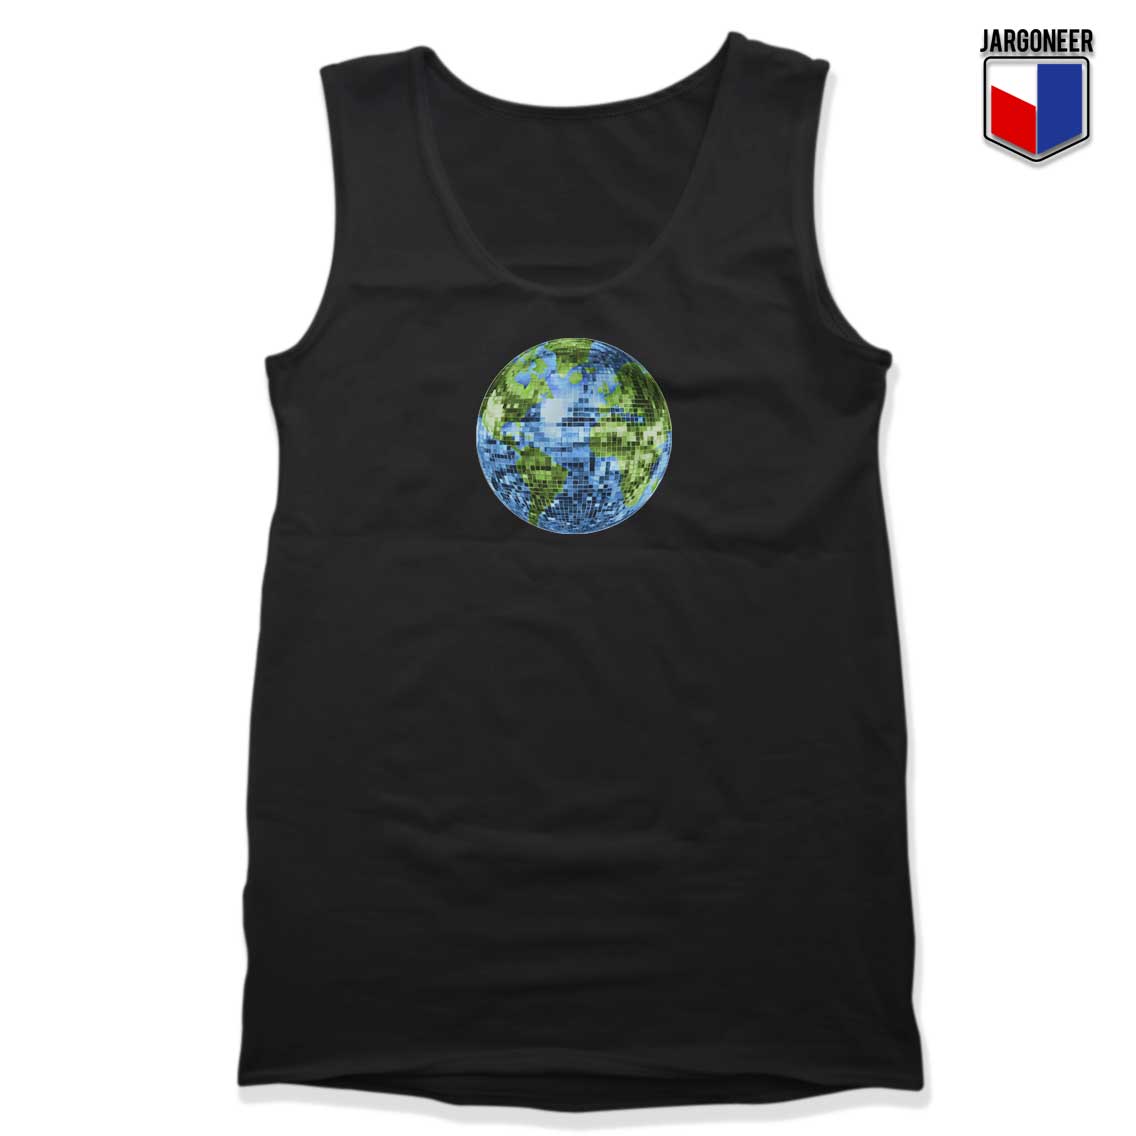 Galactic Disco Ball Planet Earth Tank Top - Shop Unique Graphic Cool Shirt Designs